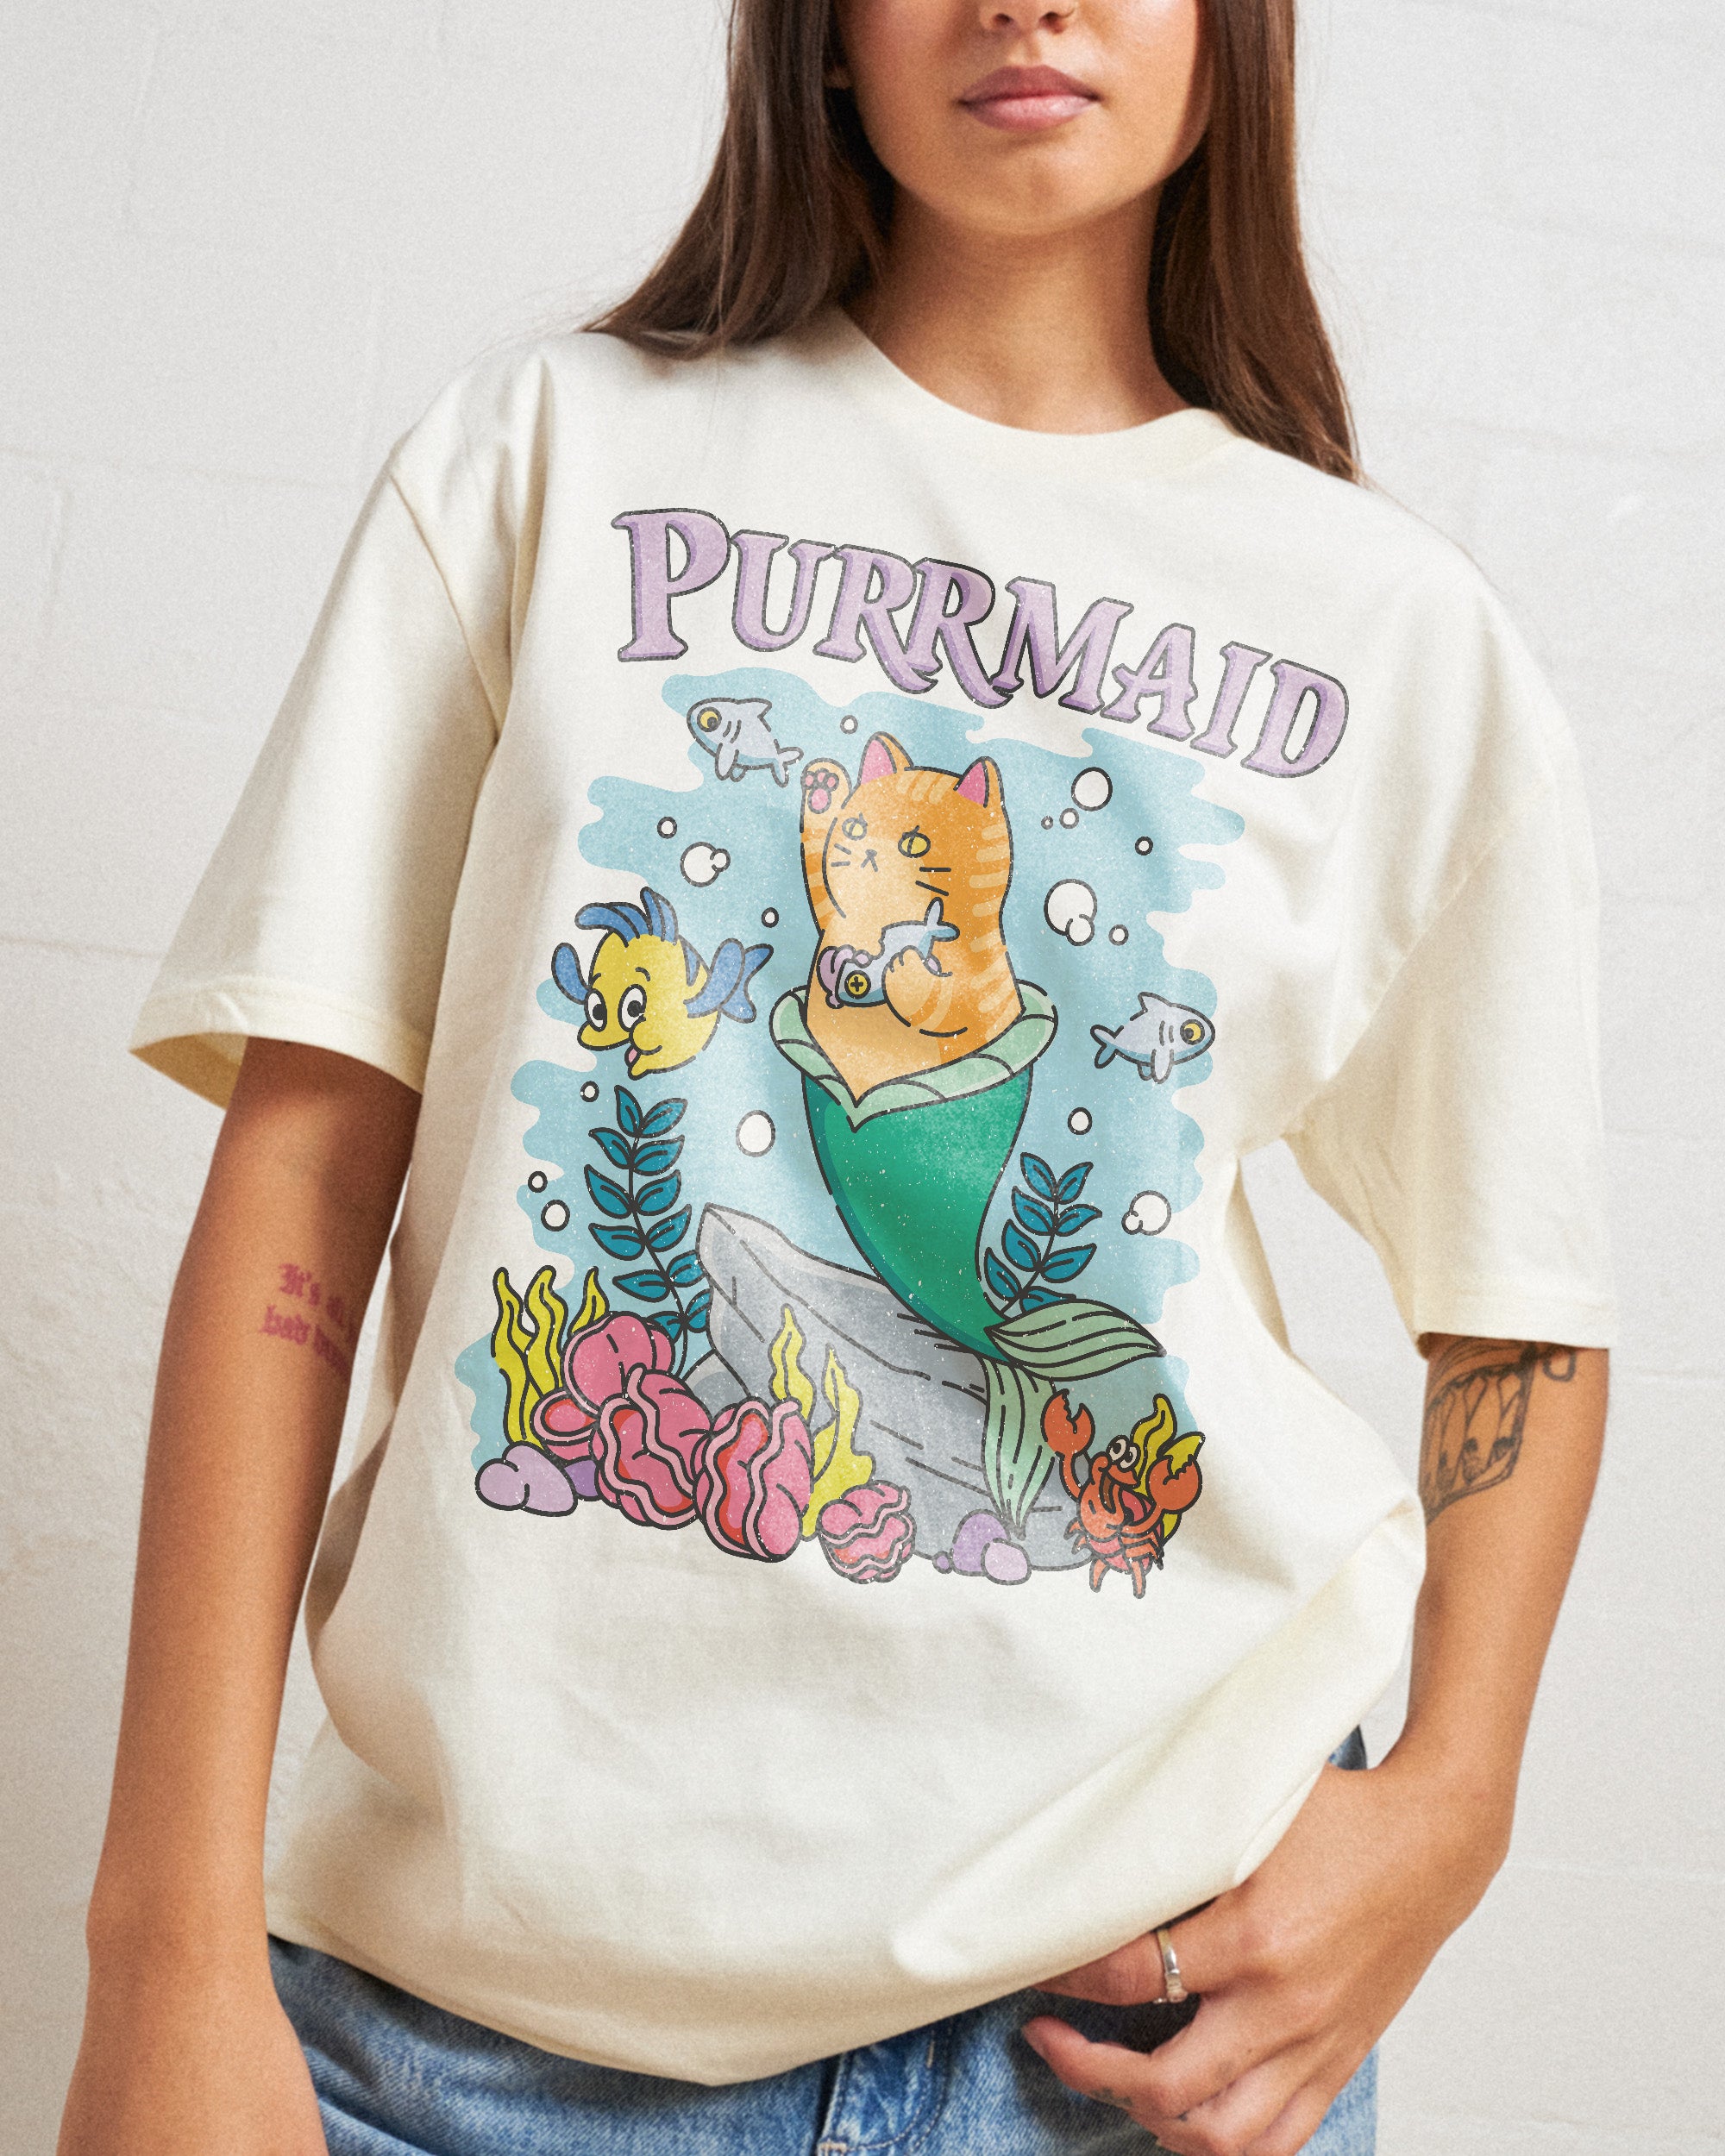 Purrmaid T-Shirt